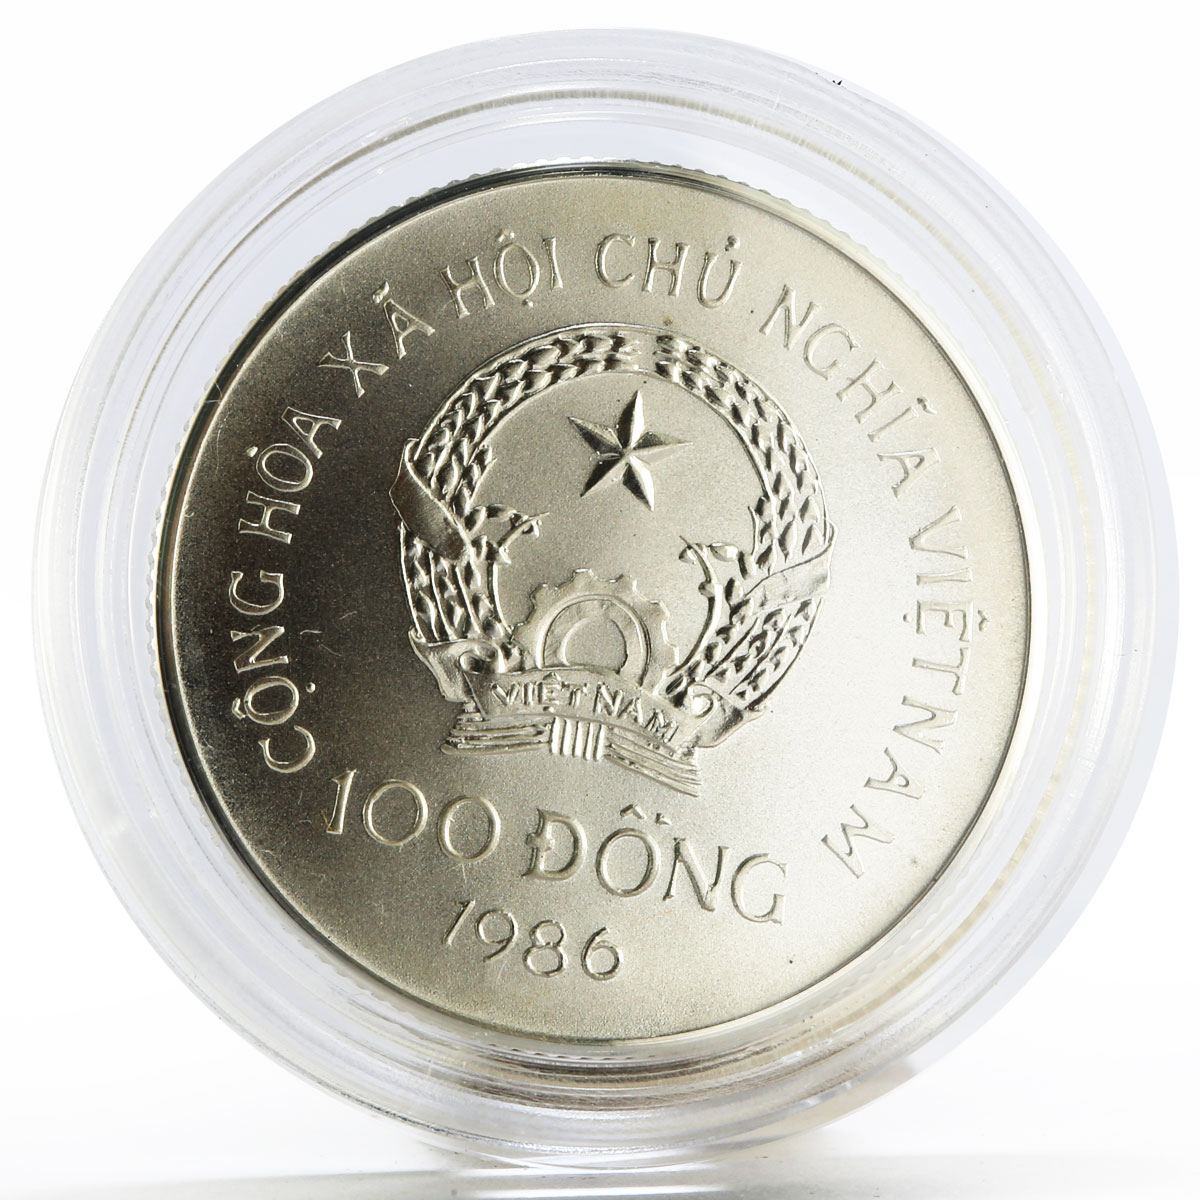 Vietnam 100 dong Natural Animals Protection series Paon silver coin 1986